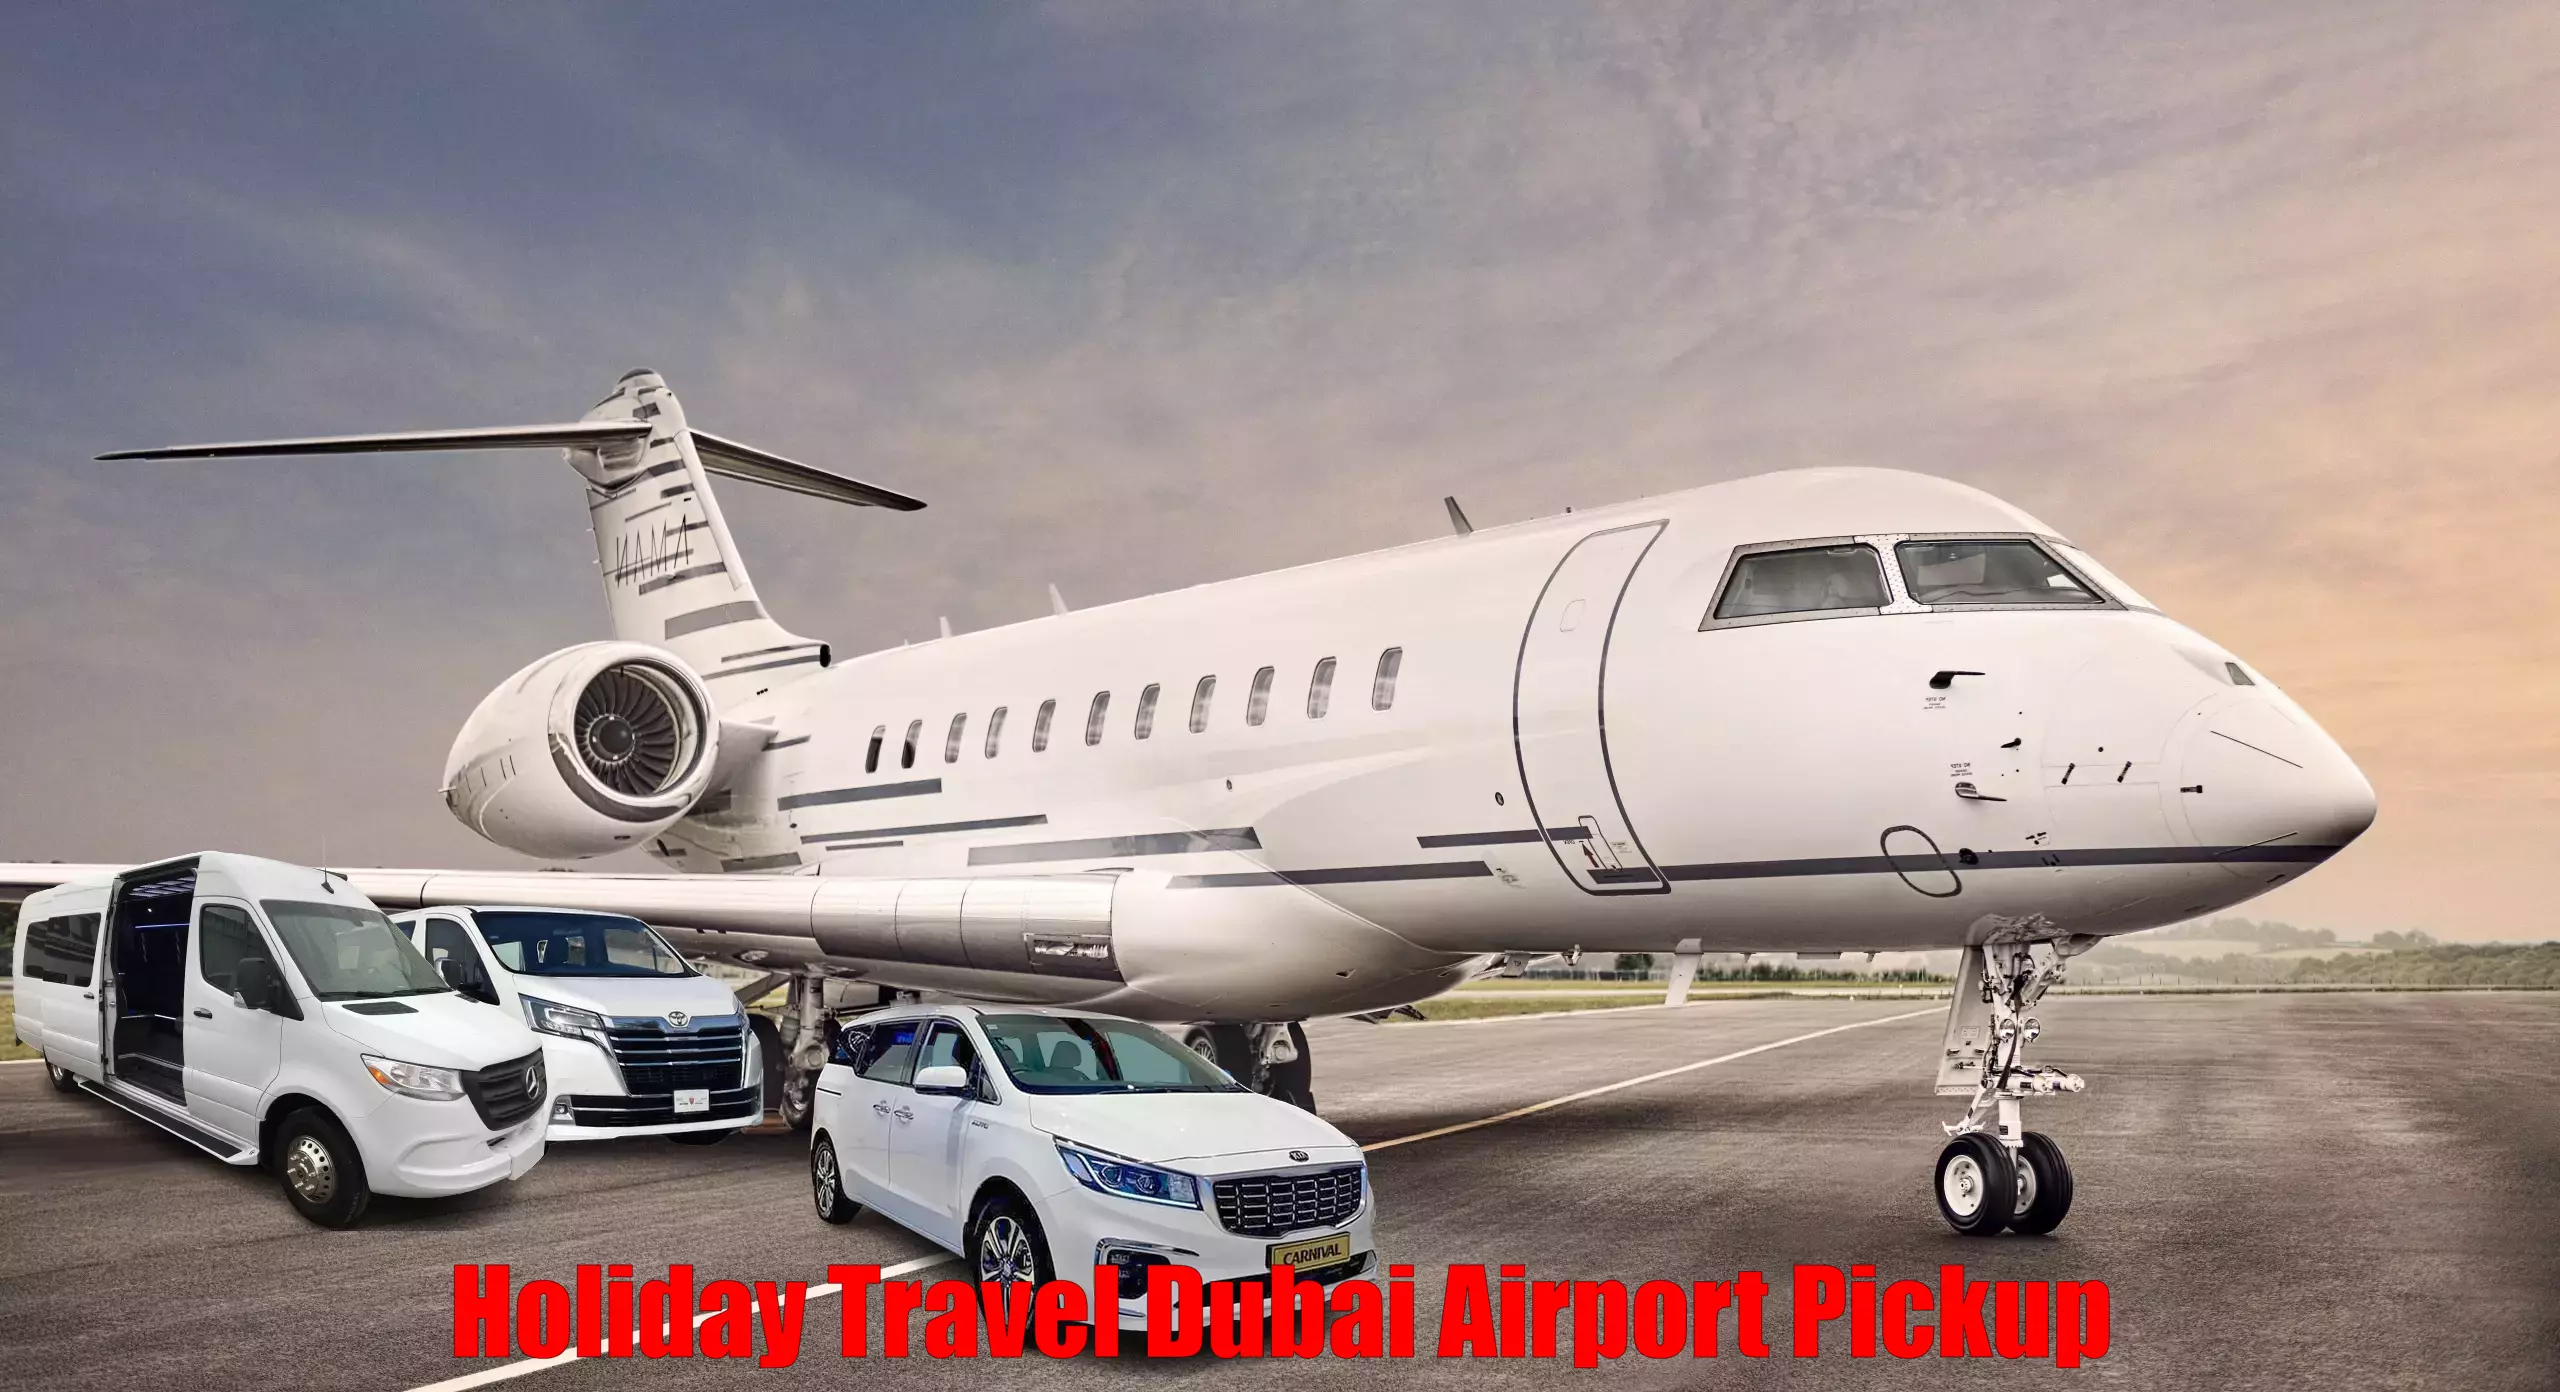 Holiday-Travel-Dubai-Airport-Pickup